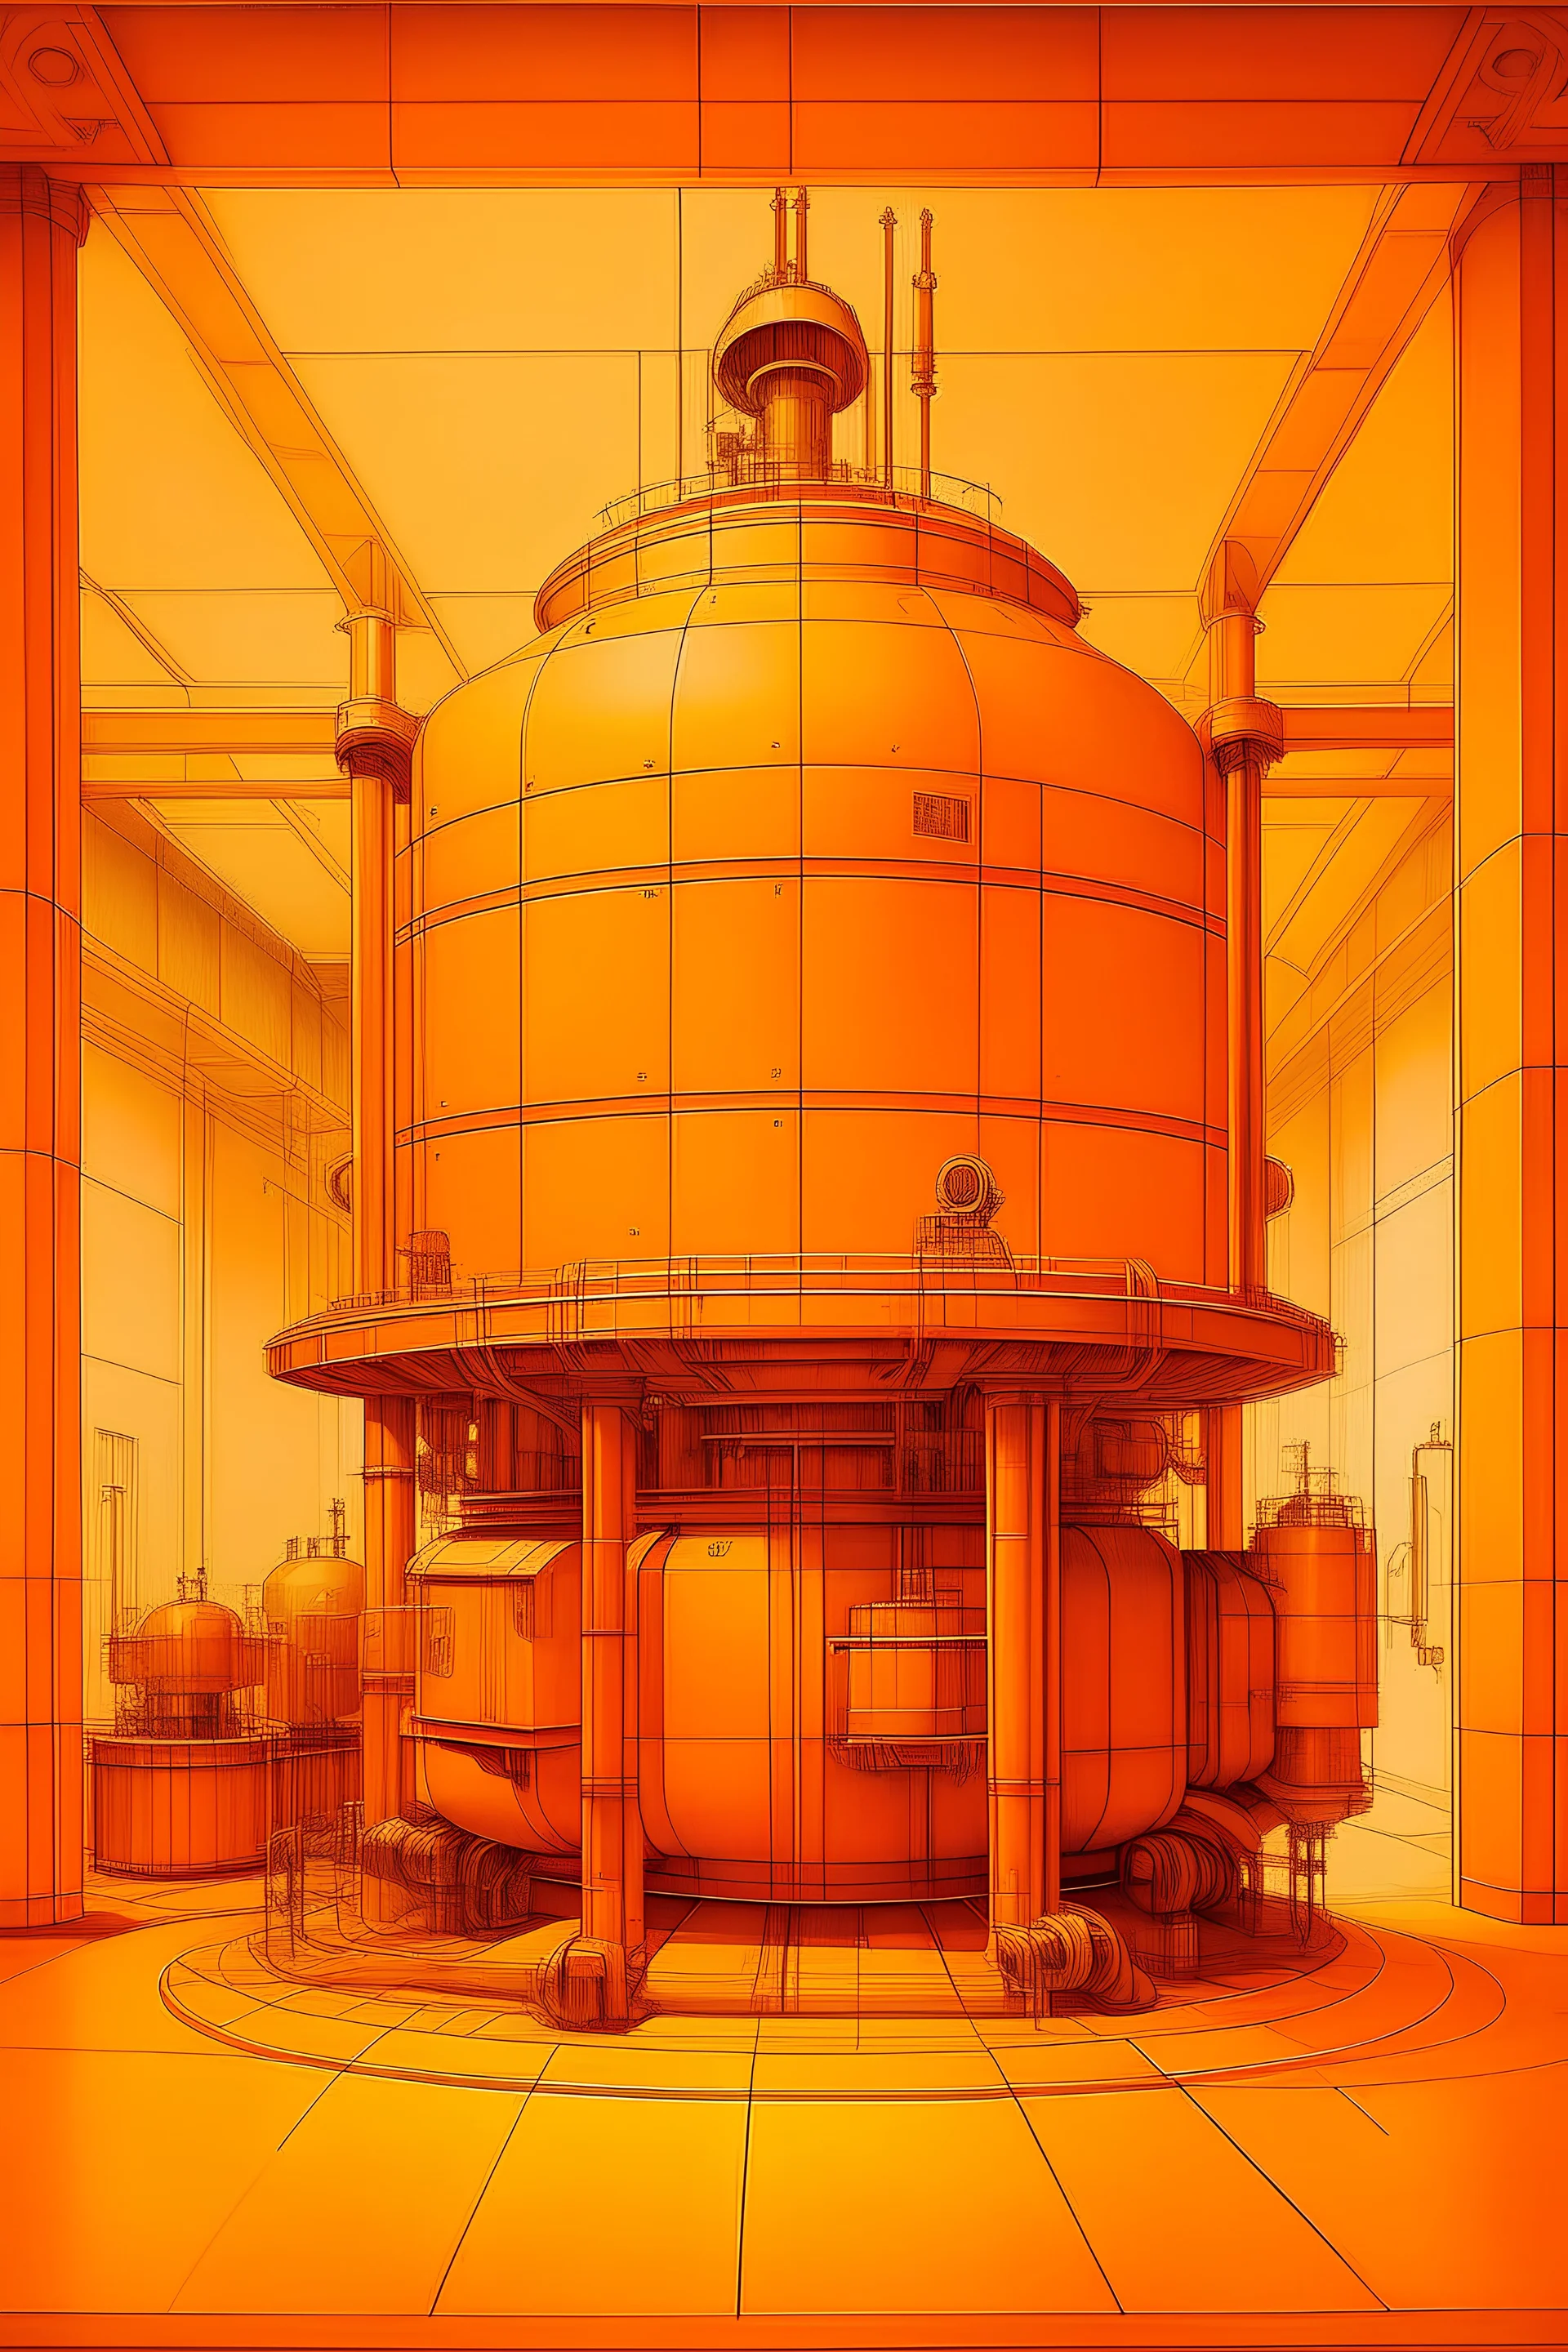 An orange robotic factory painted by Leonardo da Vinci